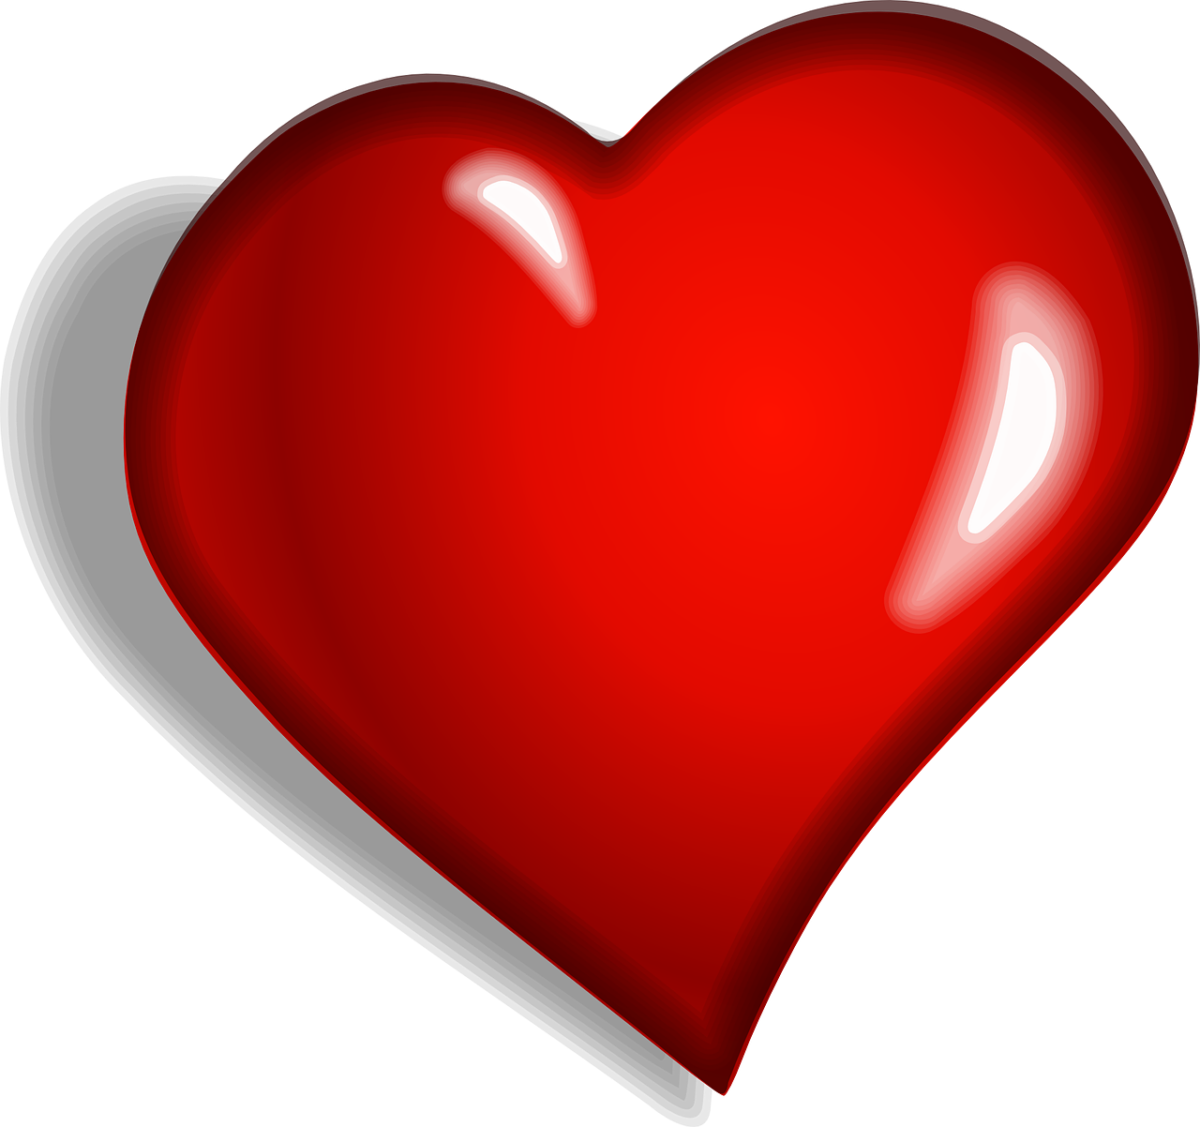 https://pixabay.com/pl/vectors/serce-czerwony-emocjonalny-29328/